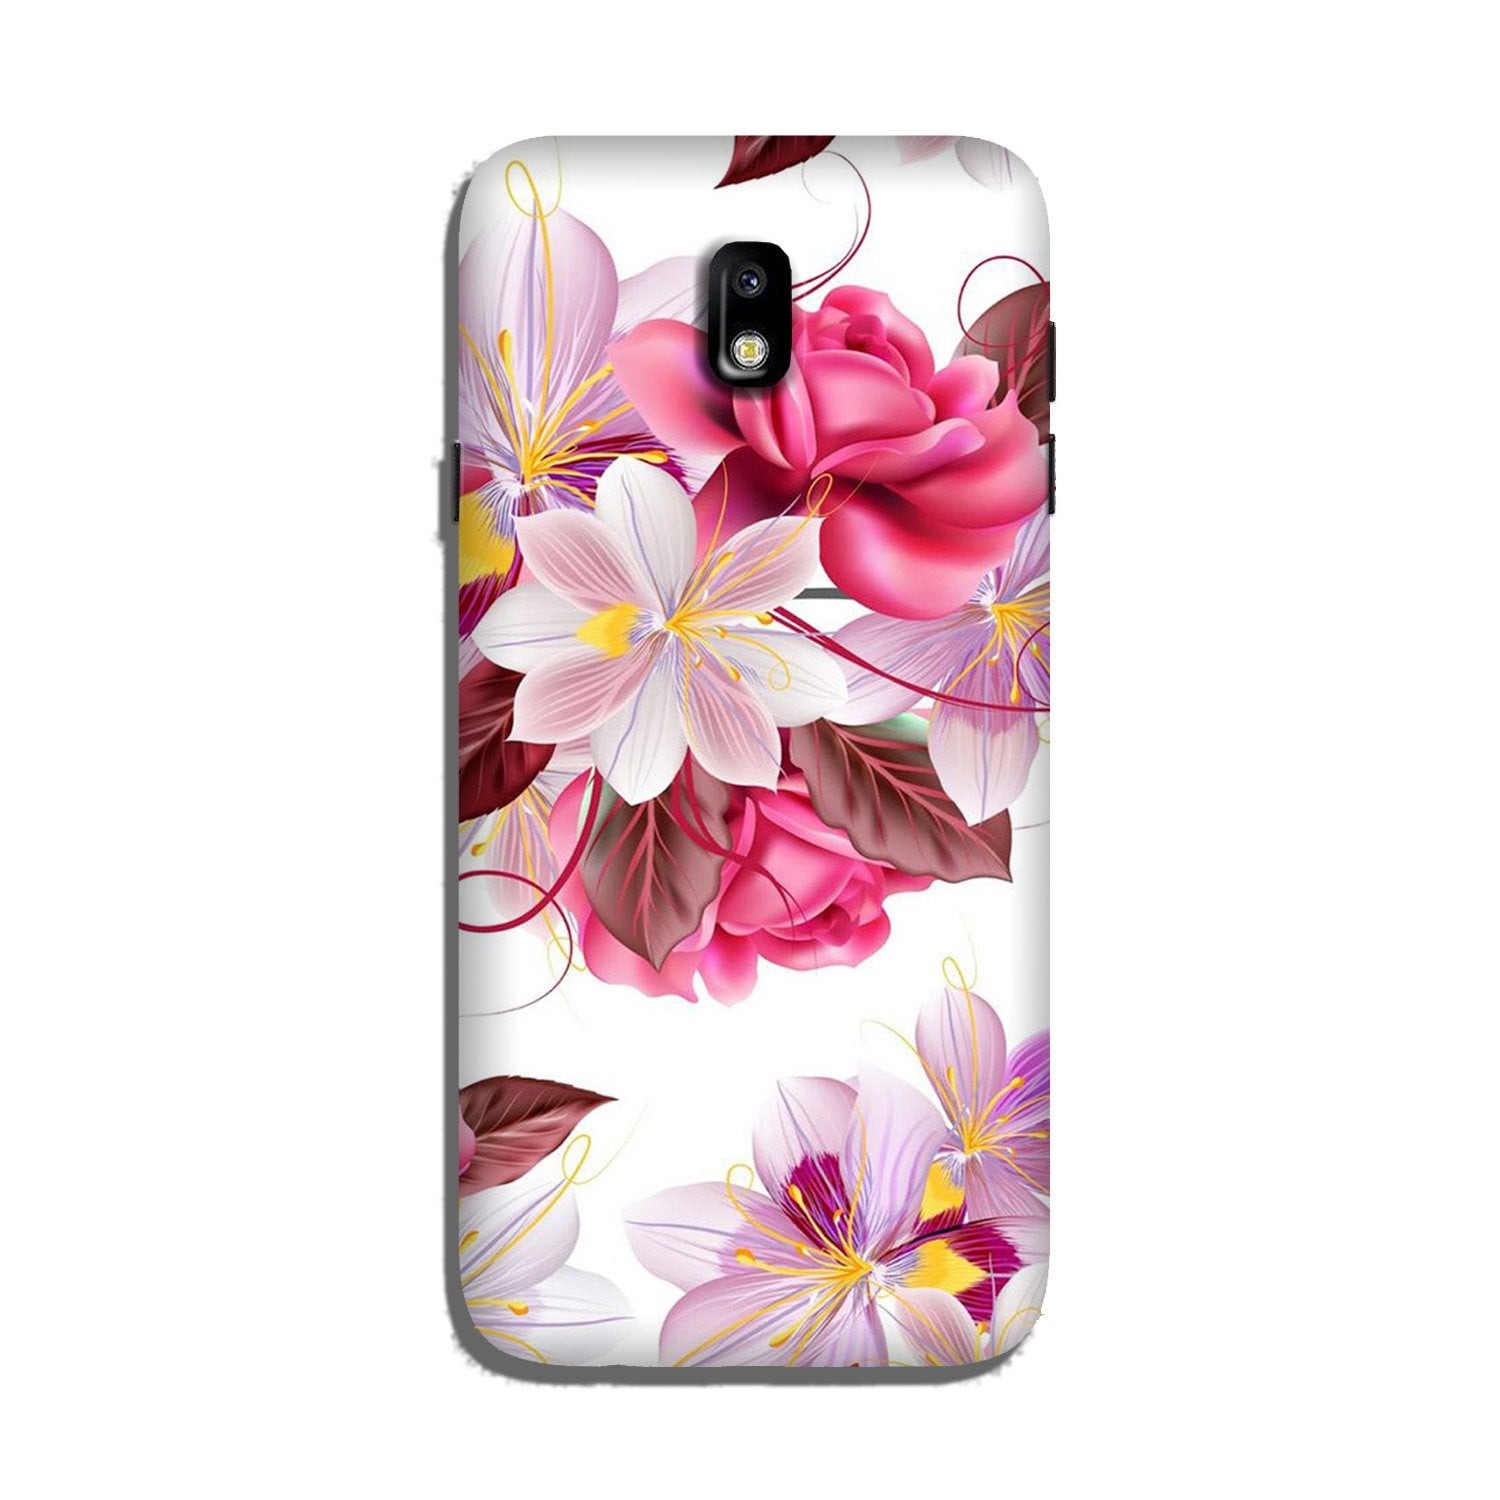 Beautiful flowers Case for Galaxy J3 Pro